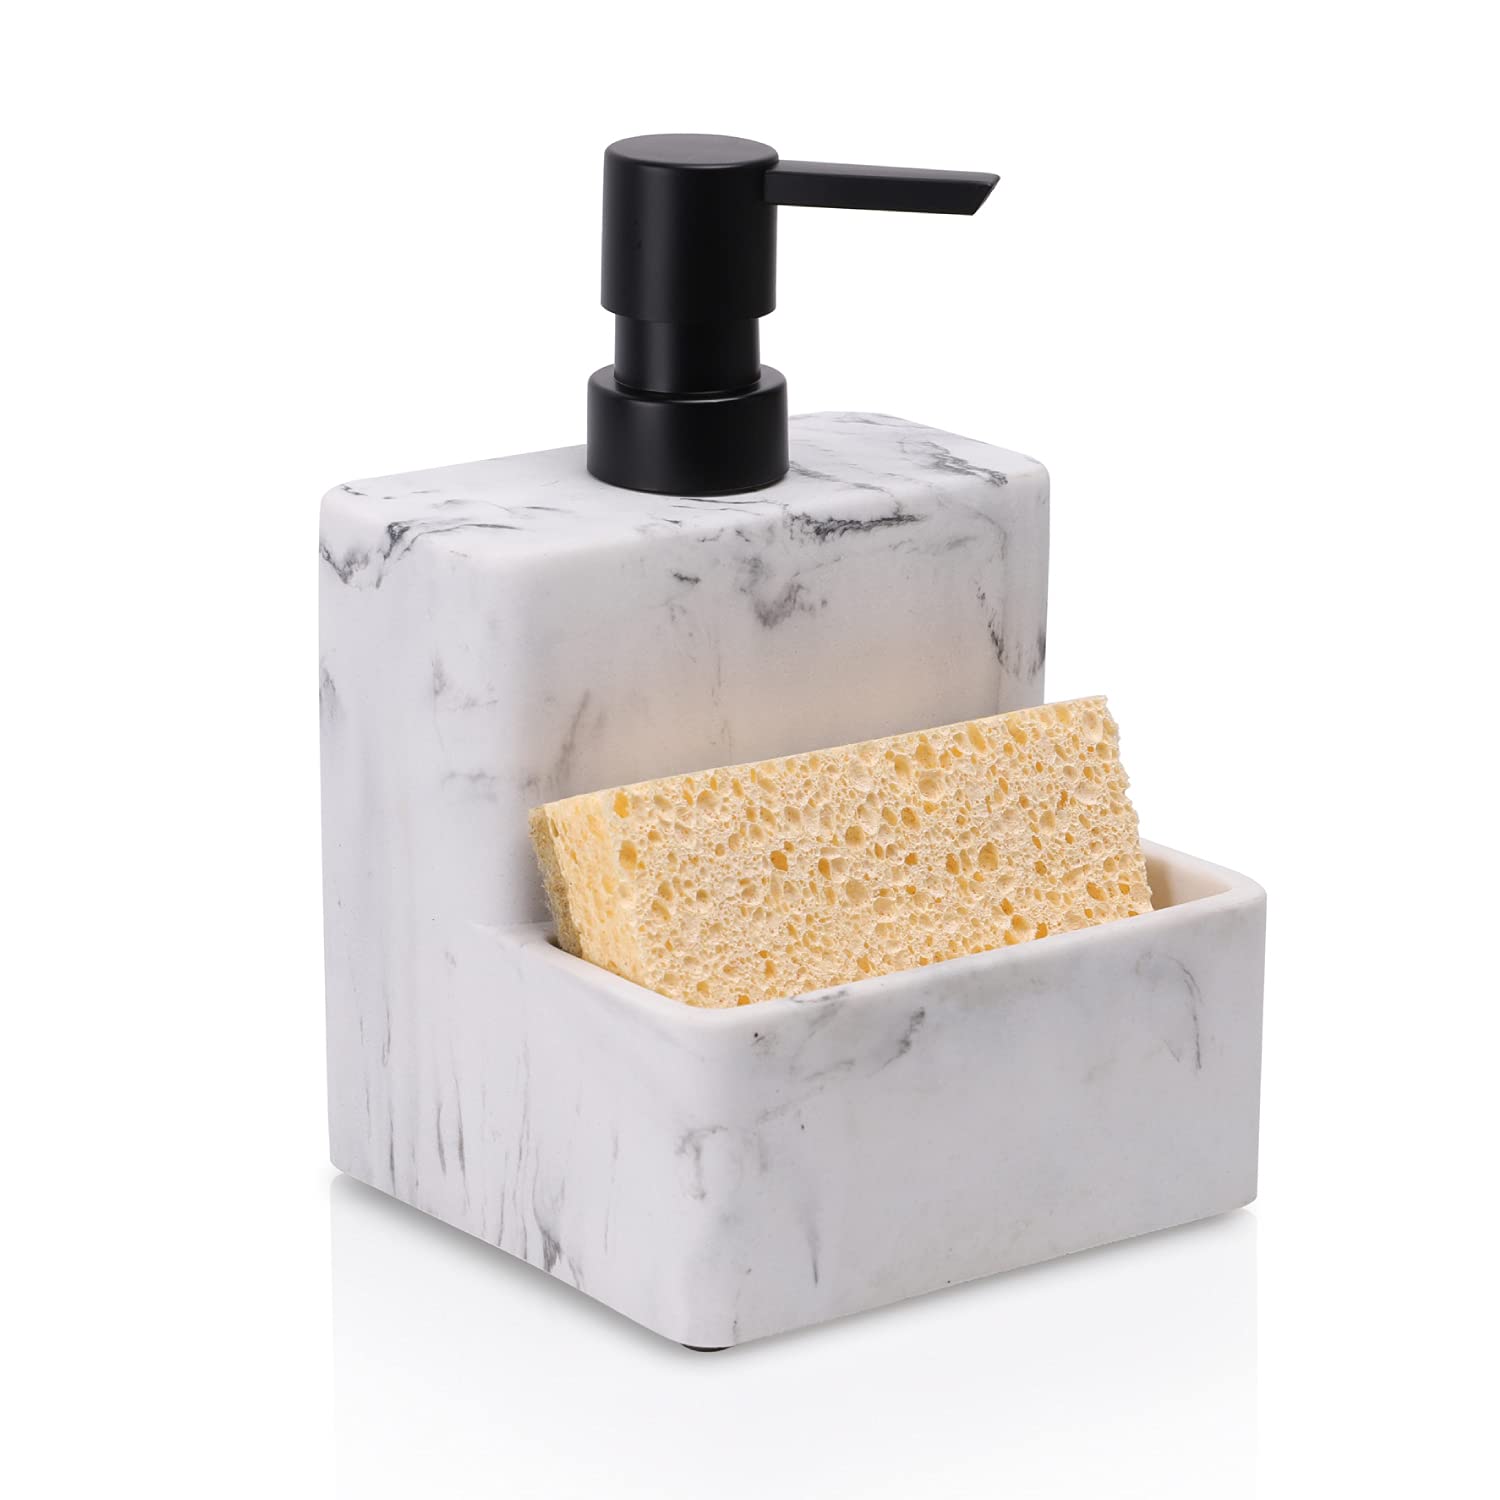 Dishwashing sink with soap and sponge